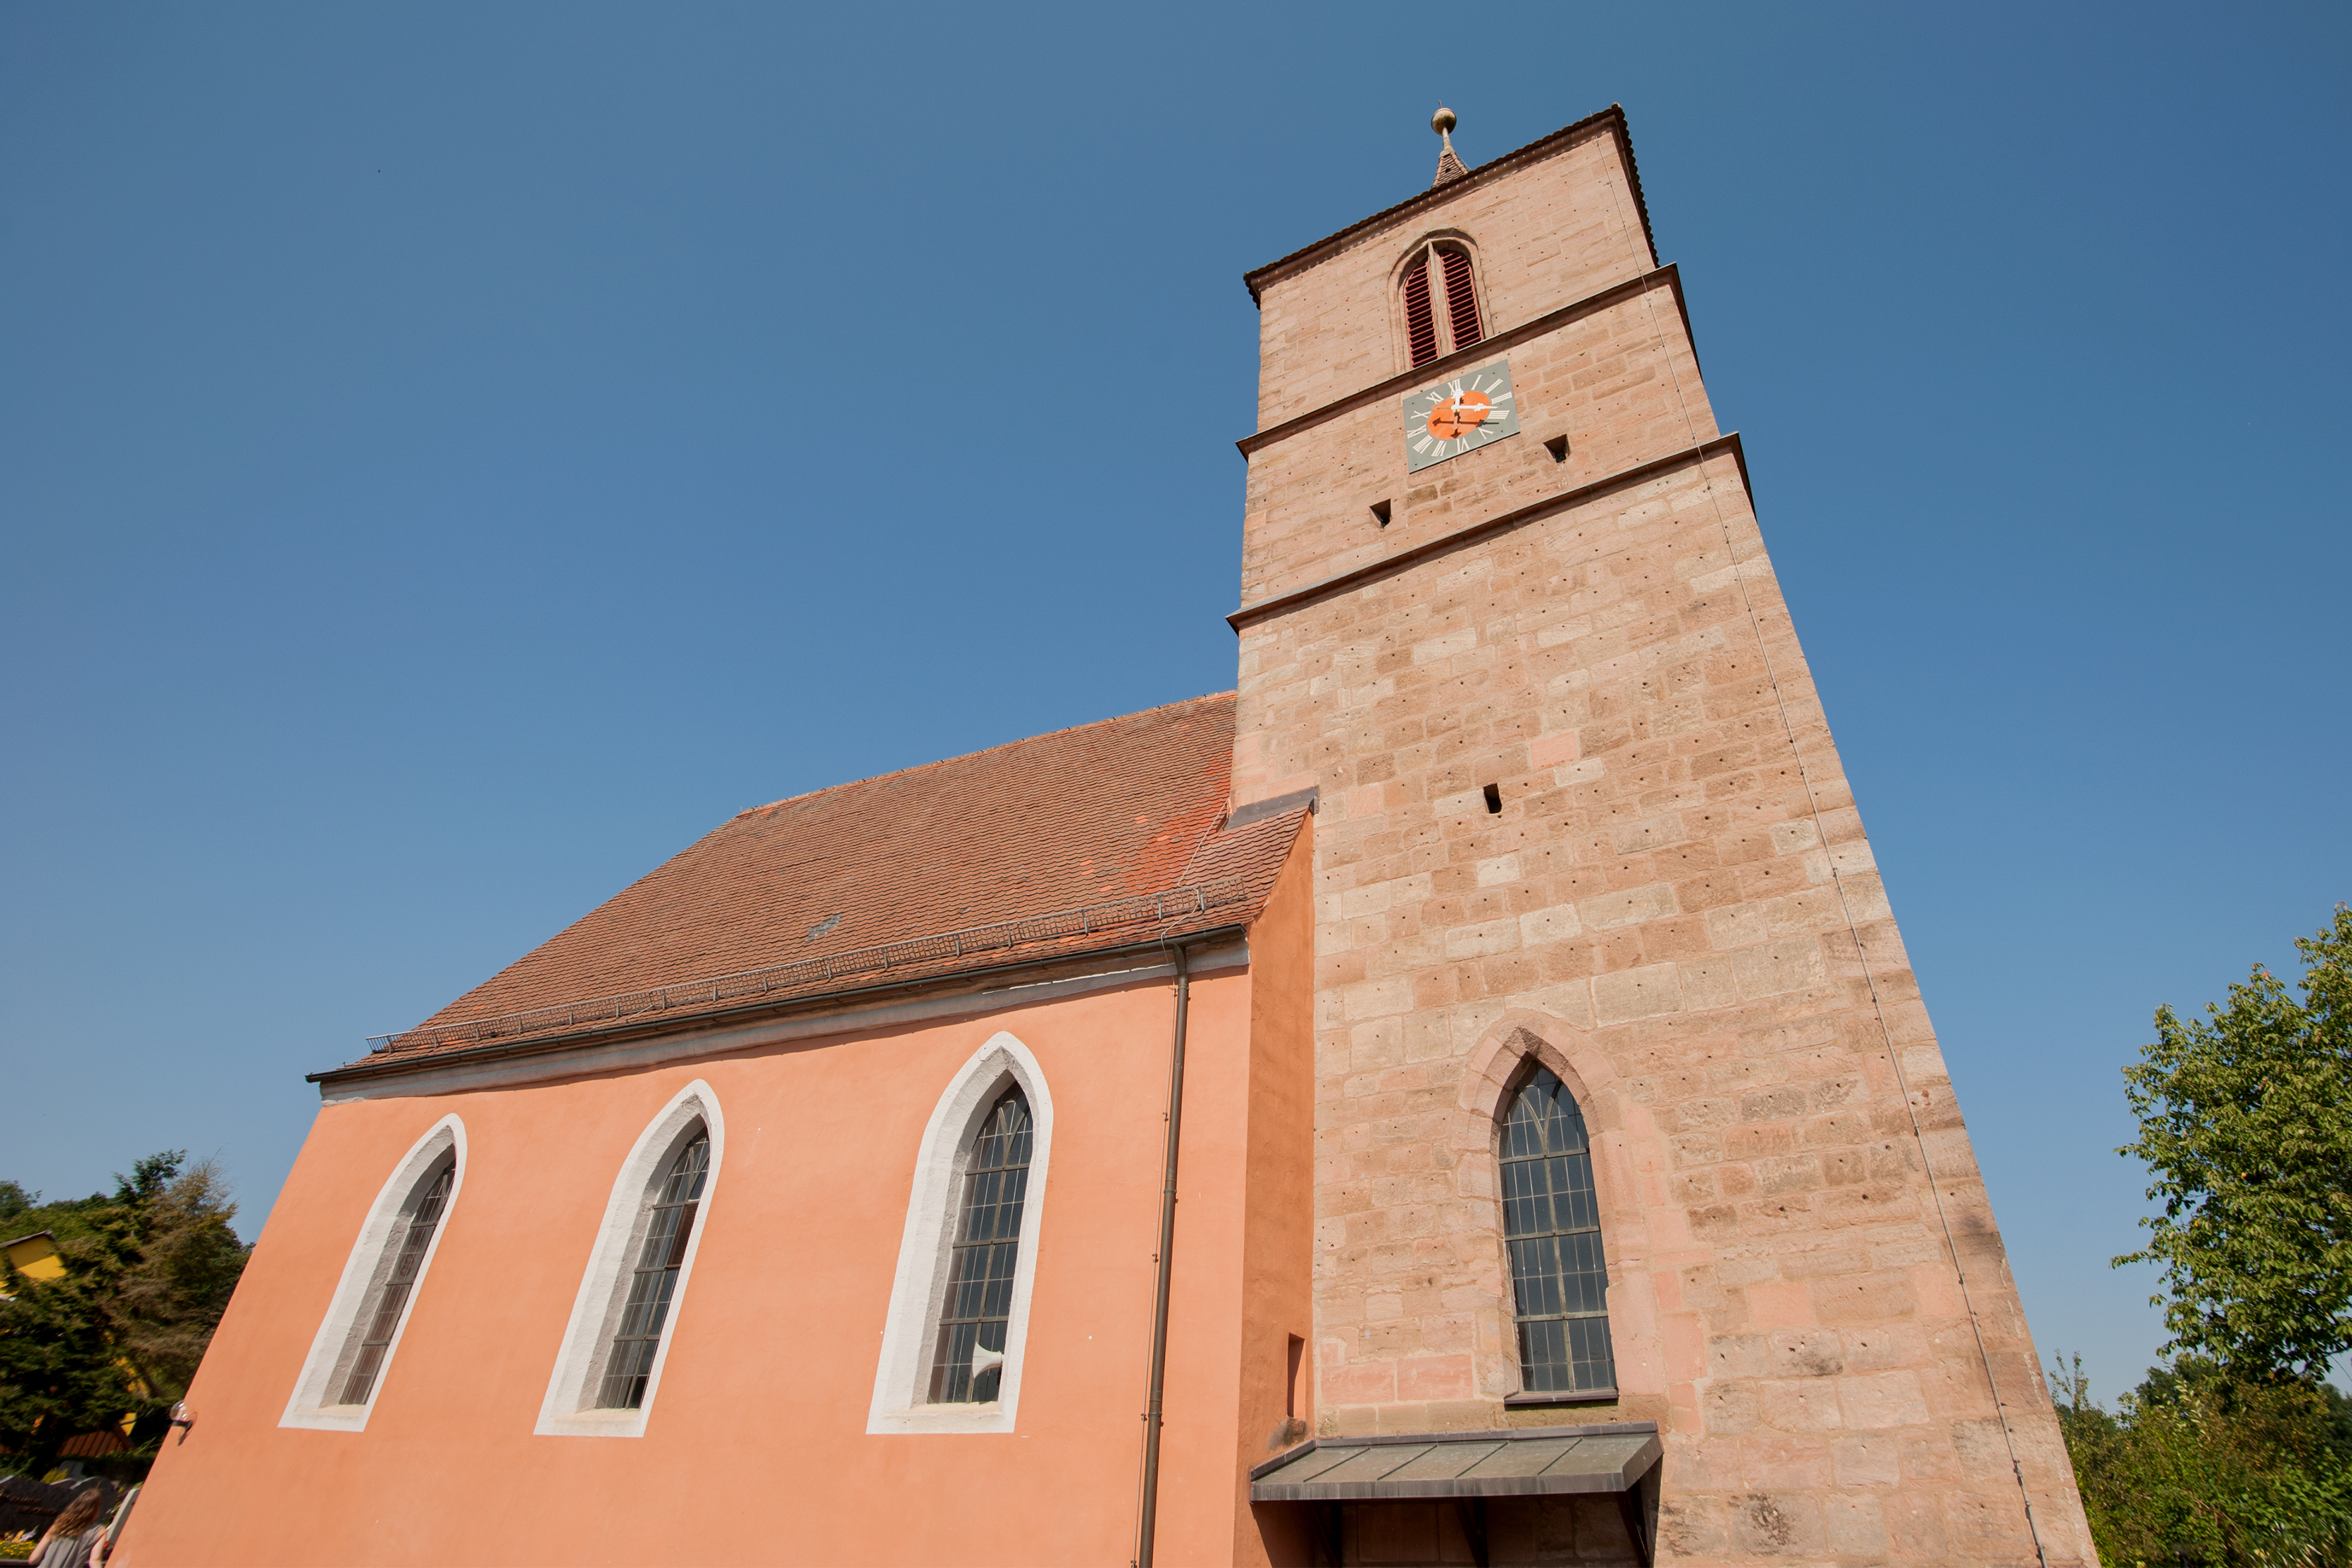  Kath. Kirche St. Vitus in Veitsaurach 